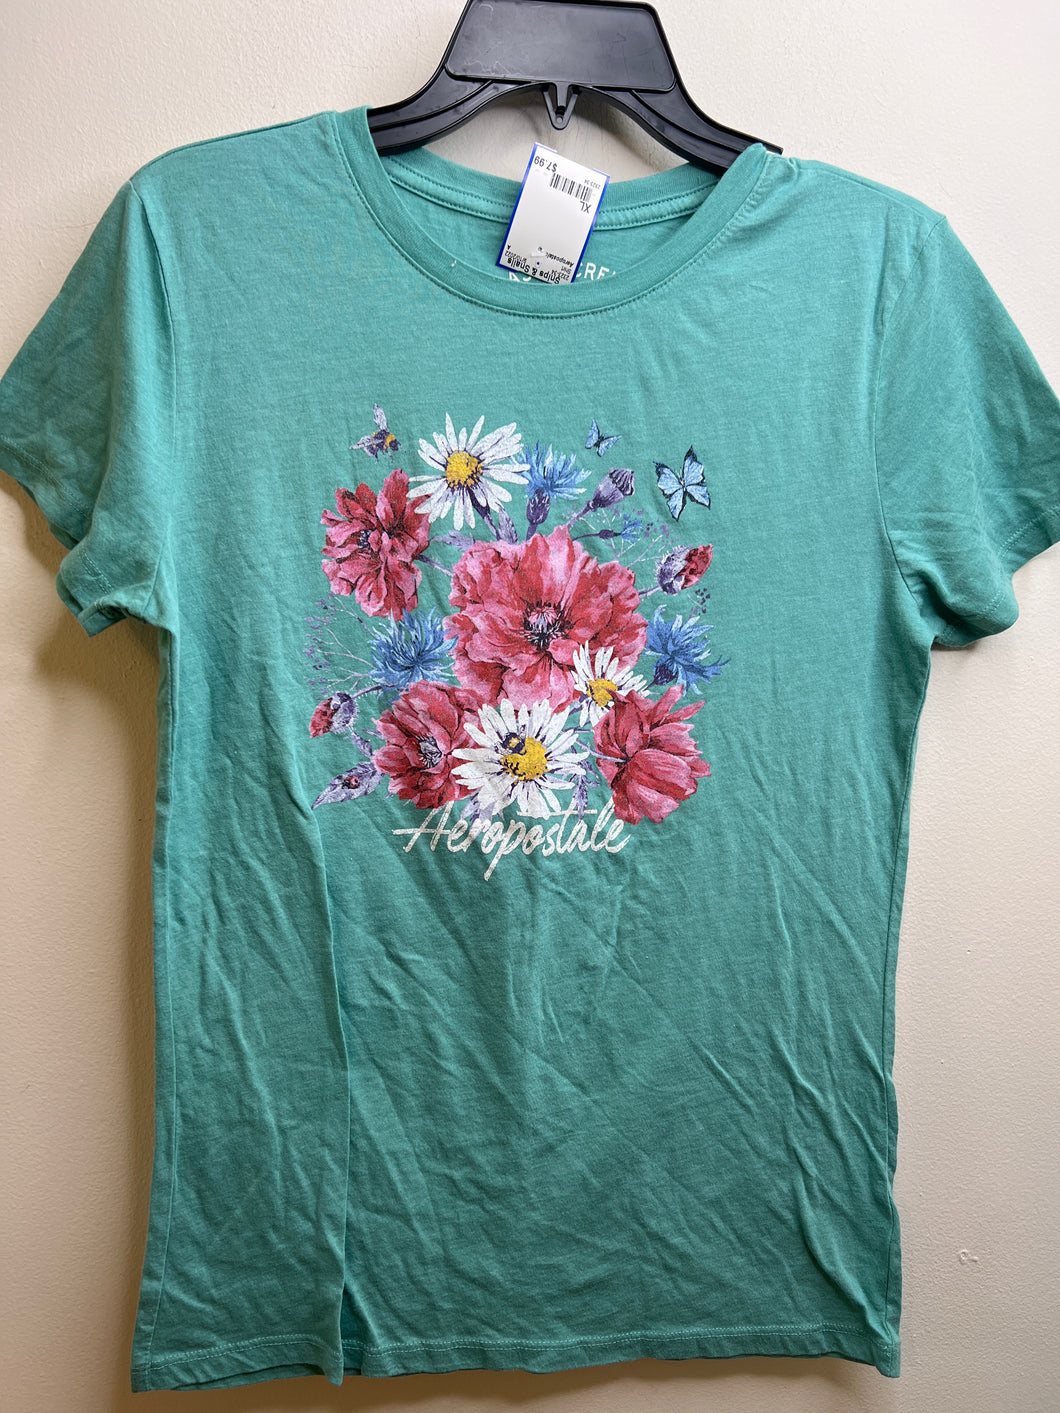 Womens Size XL Aeropostale Flower Shirt